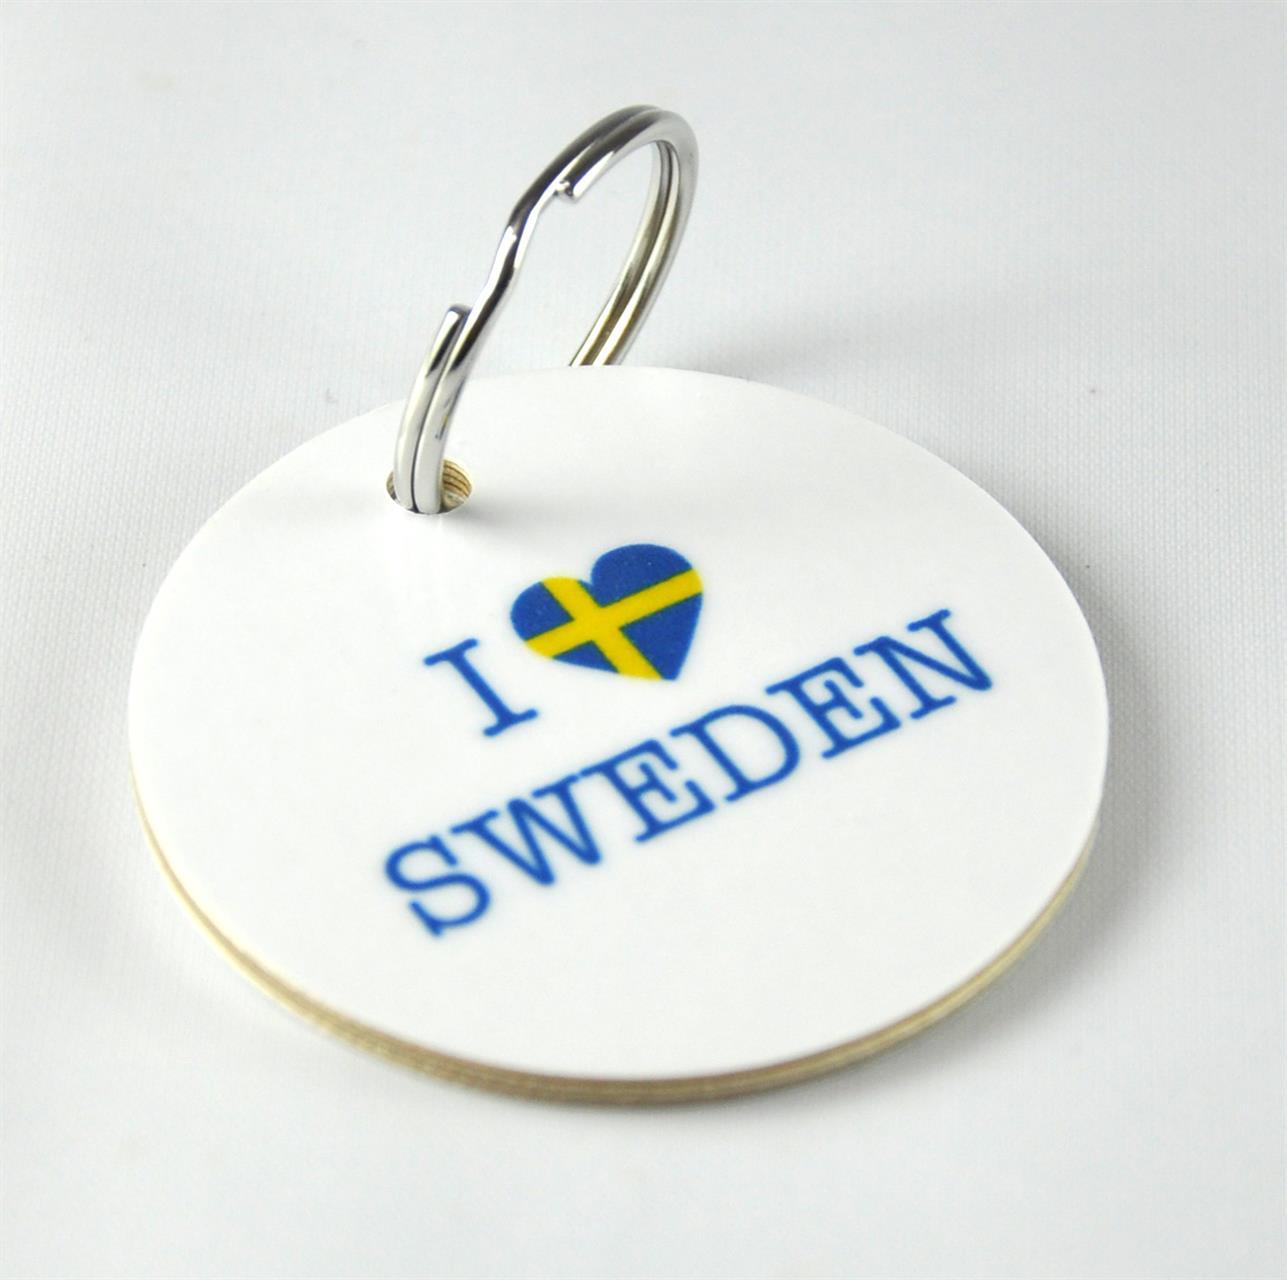 Nyckelring, I love Sweden, vit/blå-gul text